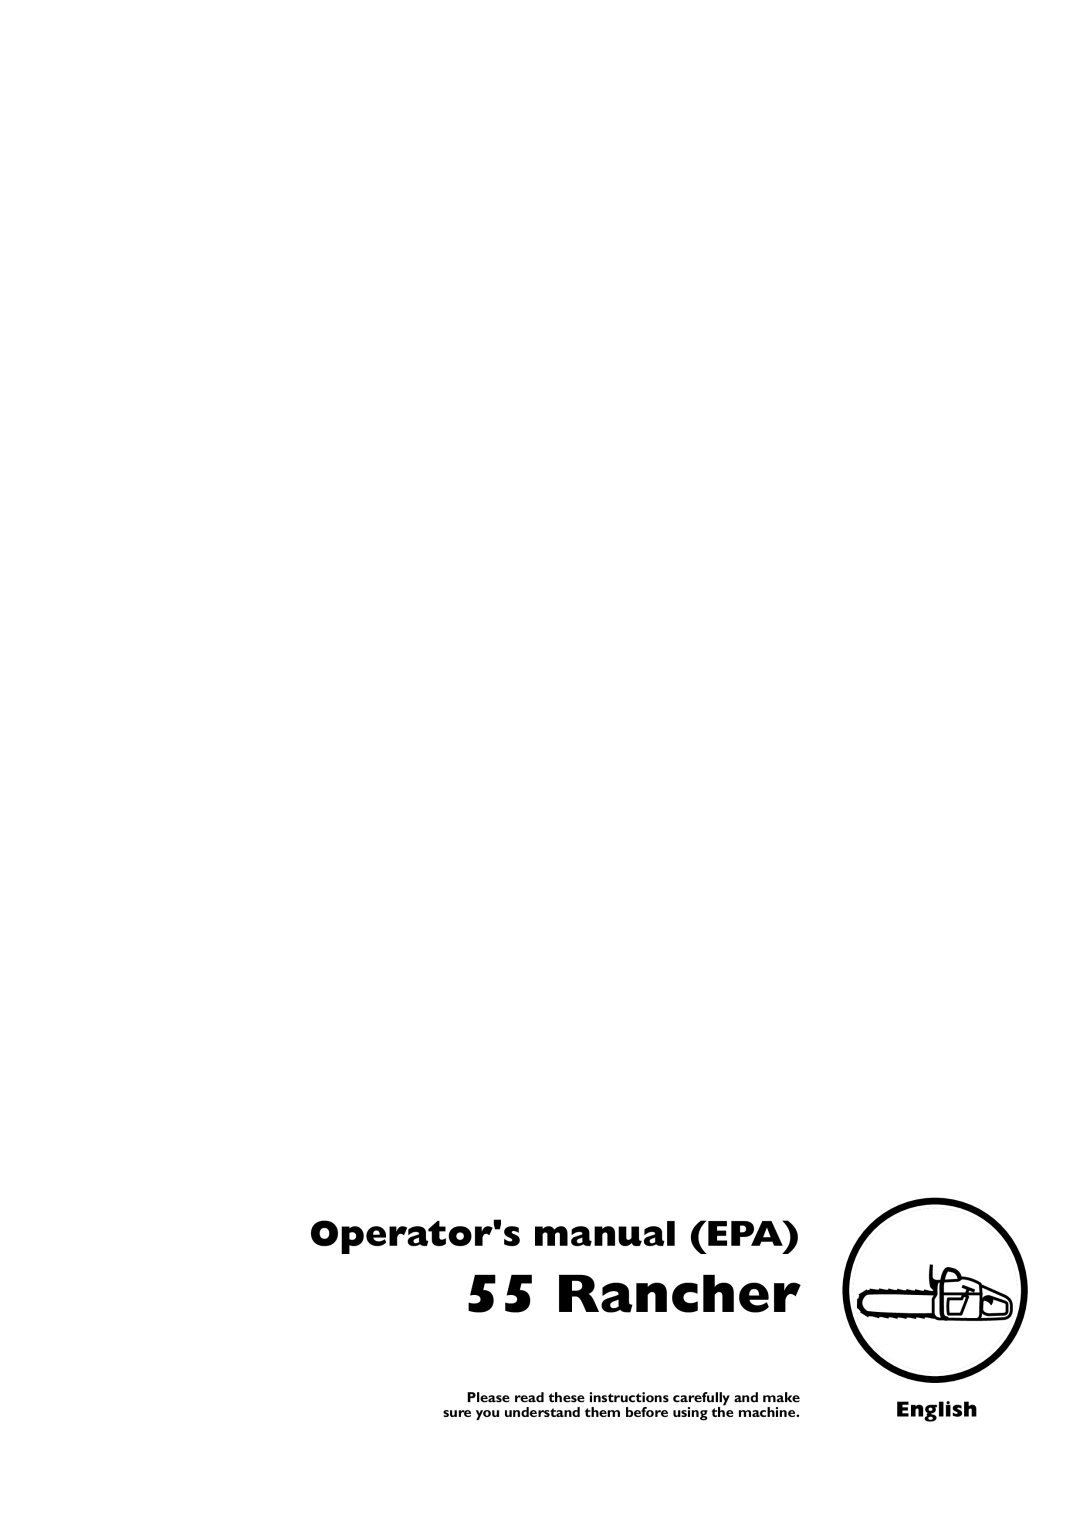 Husqvarna 55 Rancher manual Operators manual EPA, English 